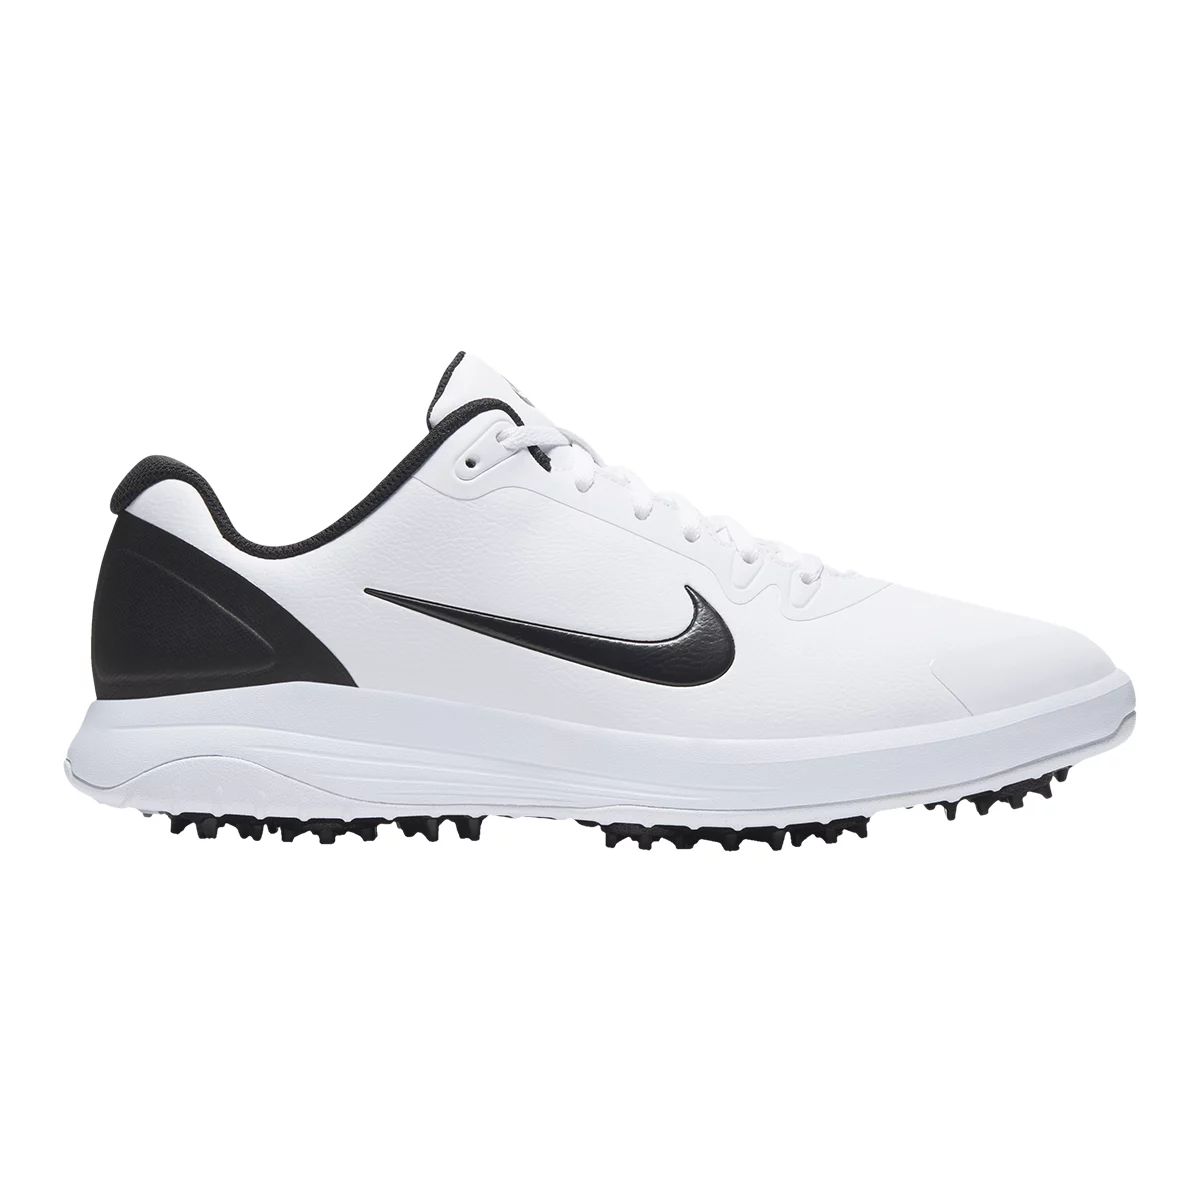 Nike Men's Infinity G Golf Shoes, Spiked, Leather, Waterproof | SportChek